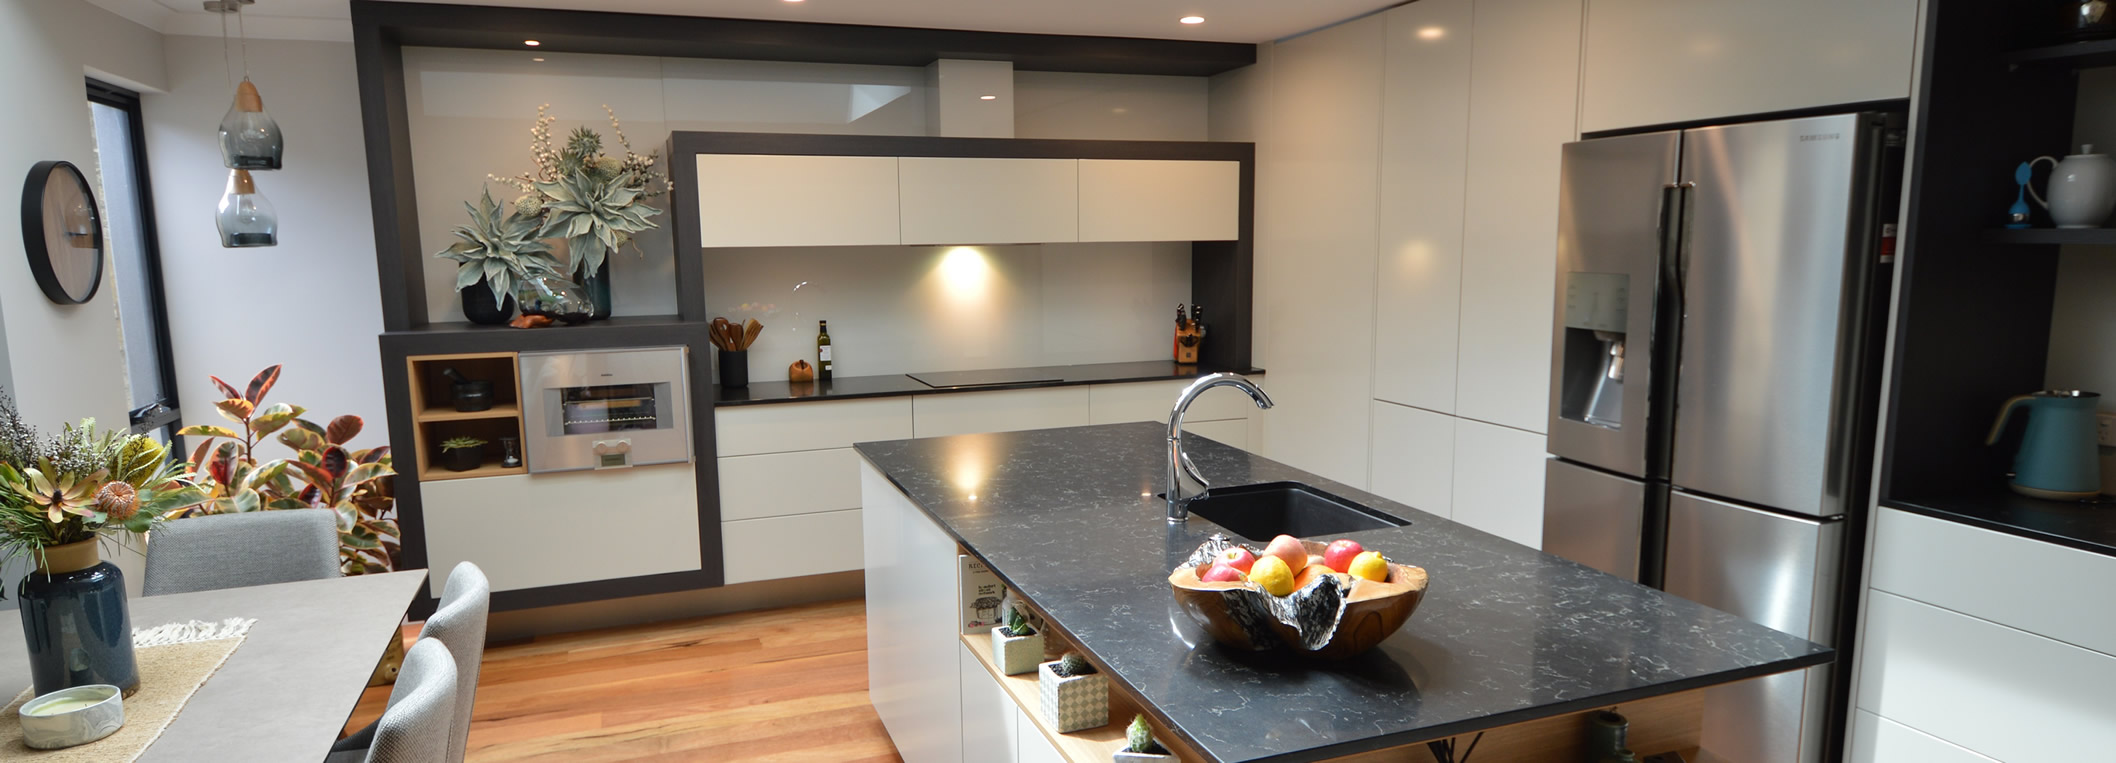 QN Designs - Kitchen & Bathroom Renovations Specialist in Perth | Small